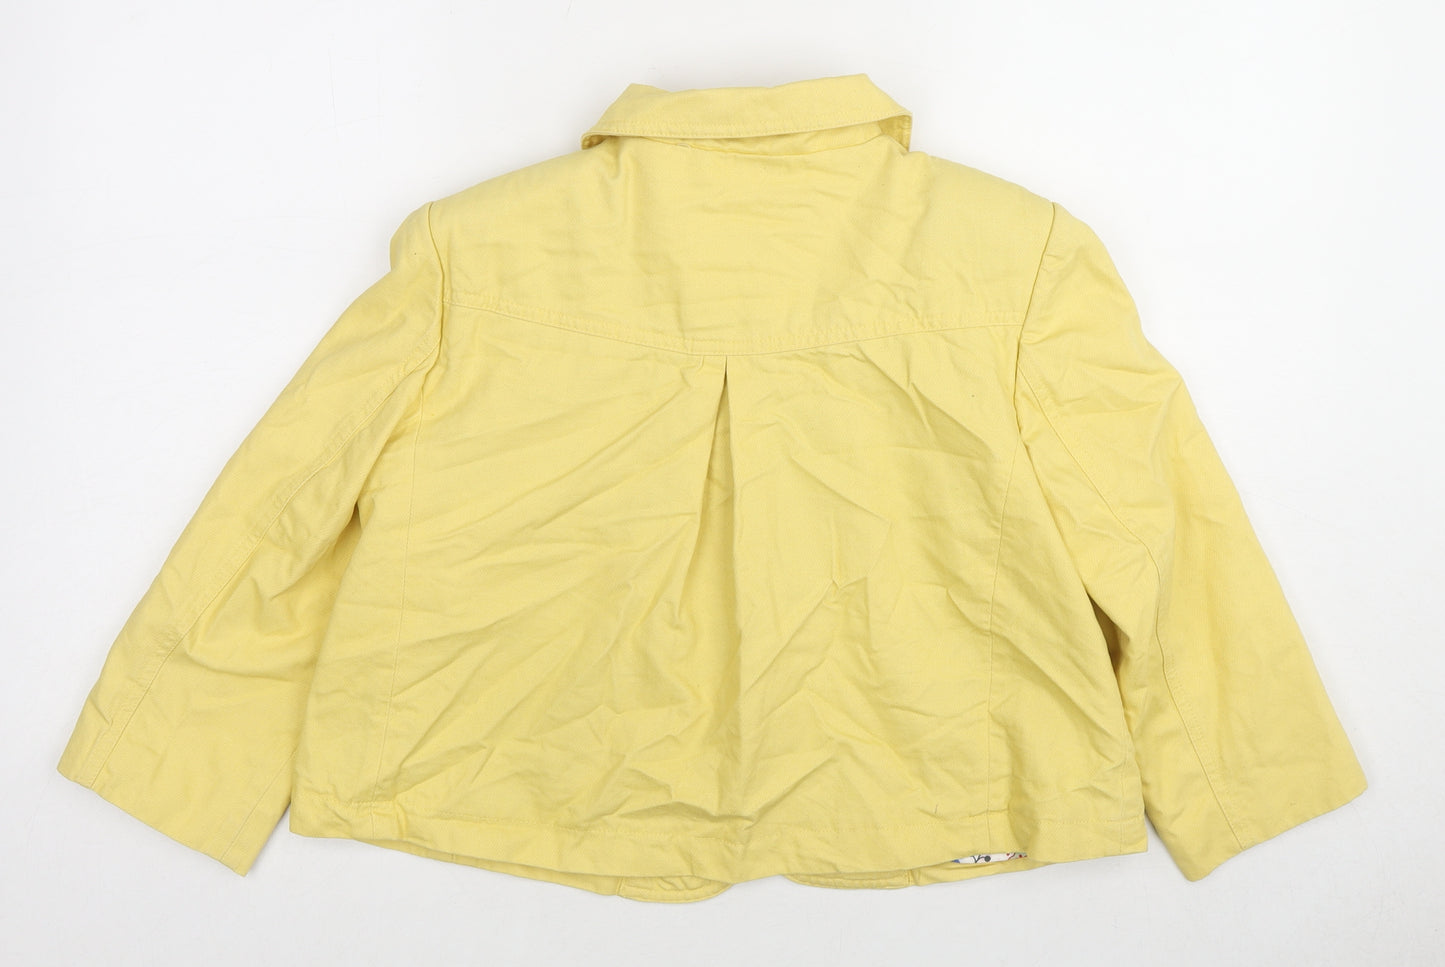 New Look Womens Yellow Jacket Size 12 Zip